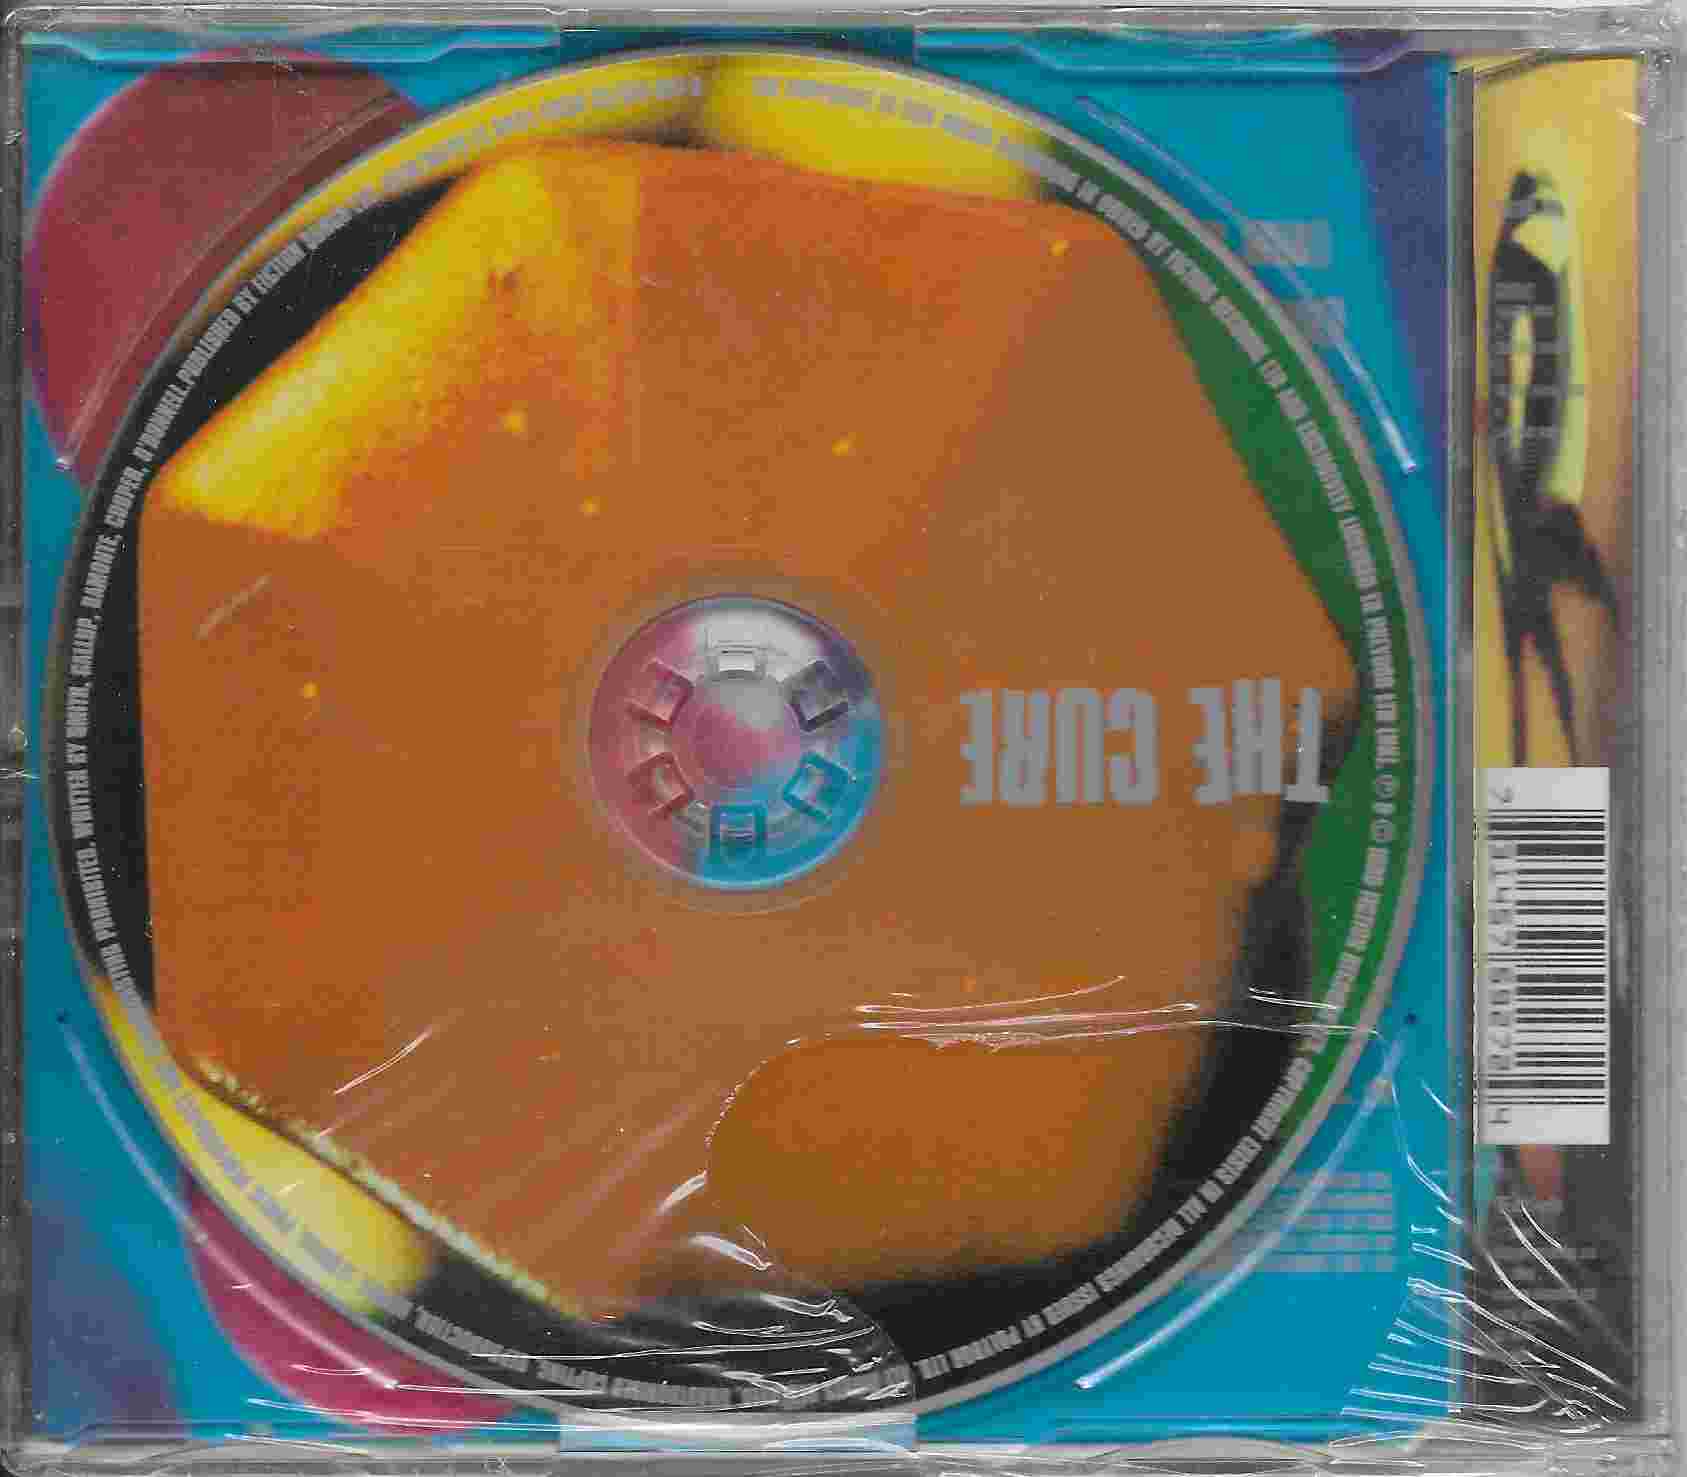 Back cover of FIC CD 53